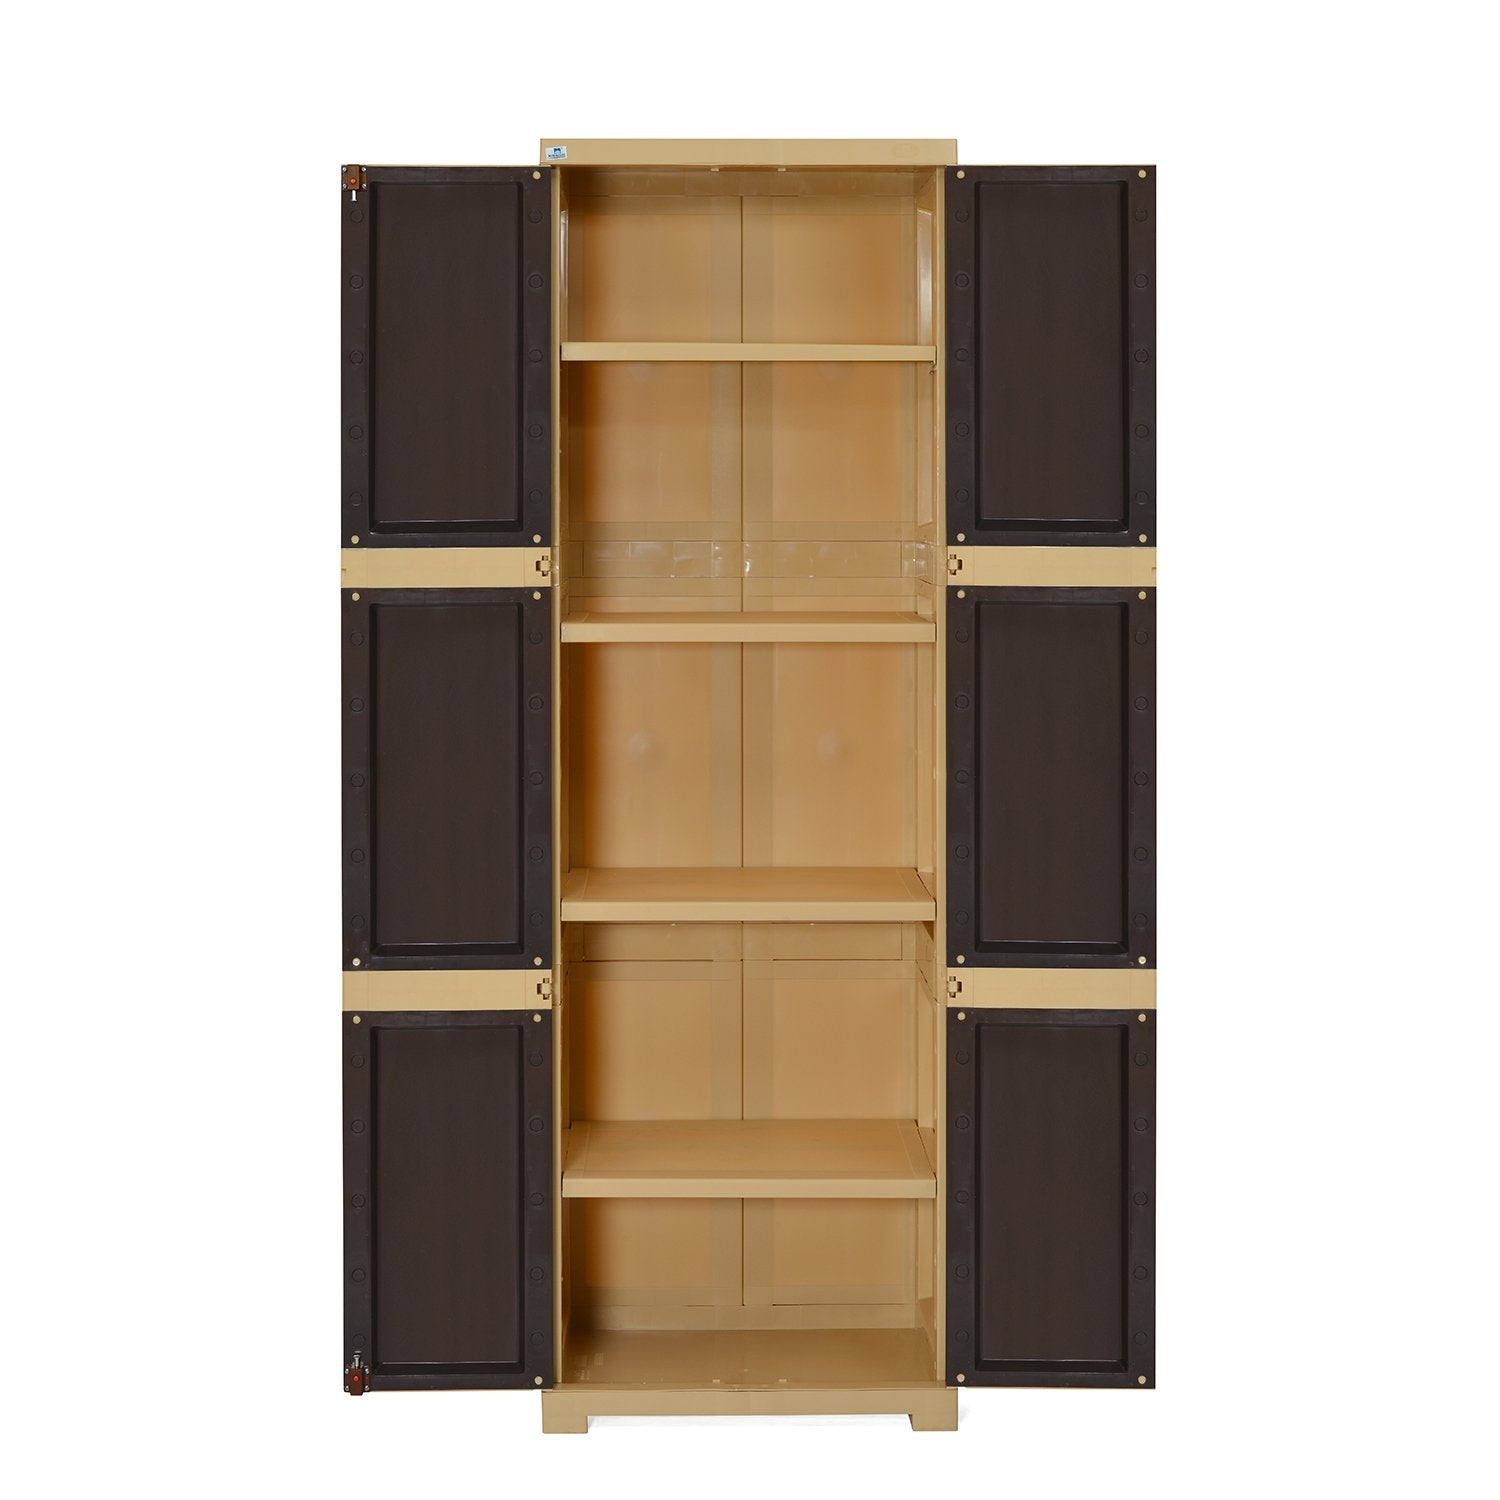 Nilkamal Freedom Mini Large (FML) Plastic Storage Cabinet (Weathered Brown/Biscuit)